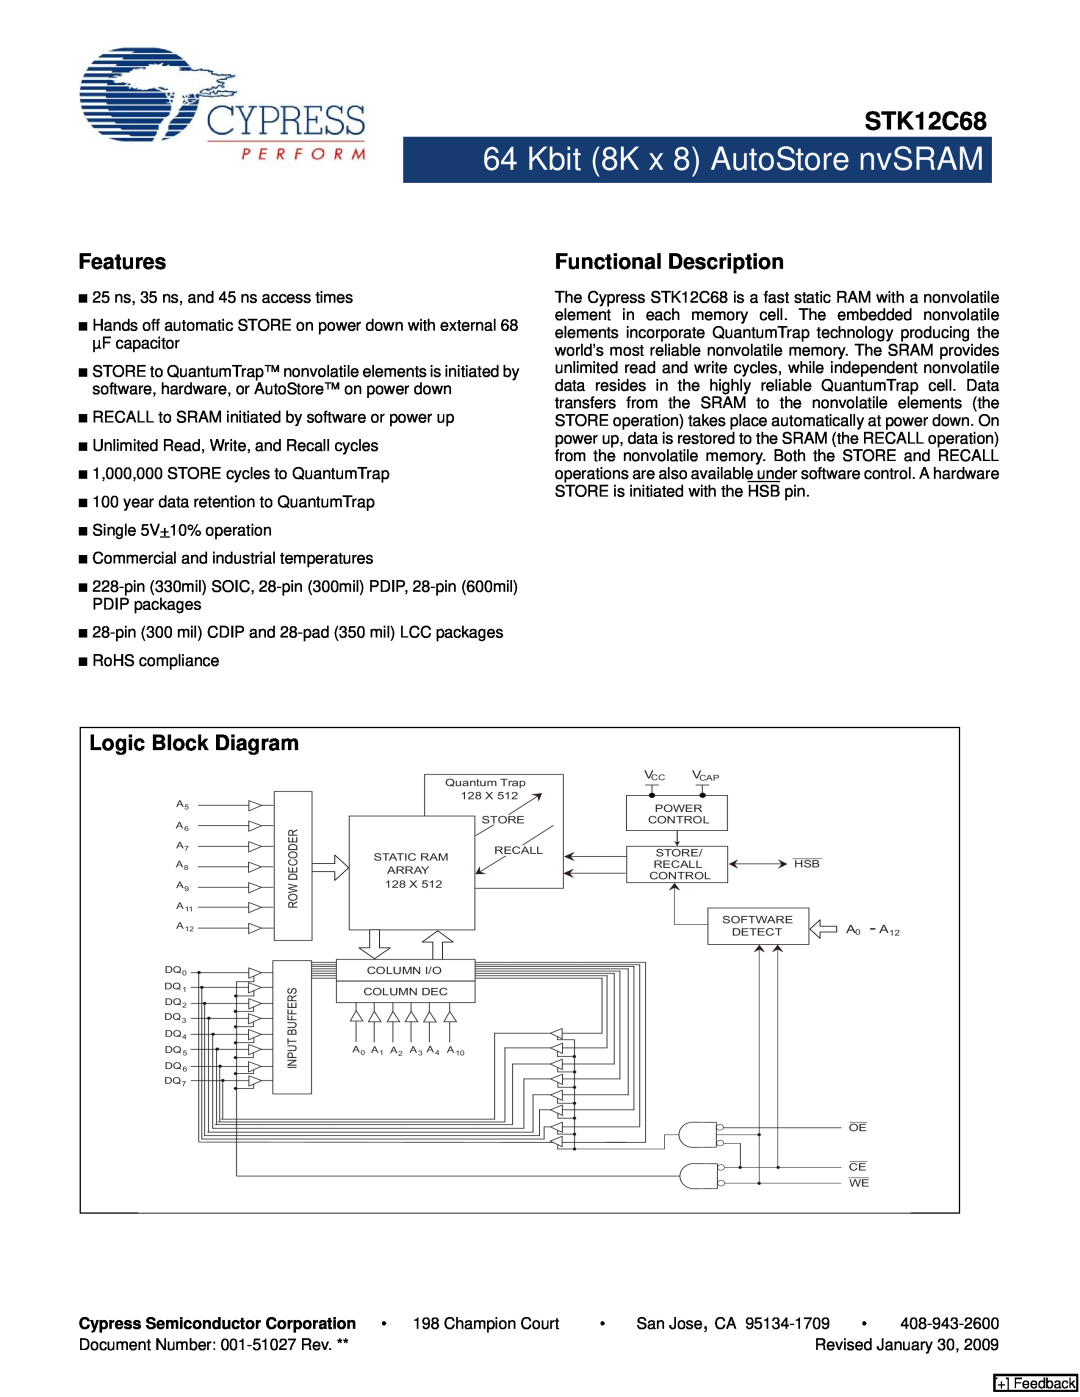 Cypress STK12C68 manual Features, Functional Description, Cypress Semiconductor Corporation, Kbit 8K x 8 AutoStore nvSRAM 